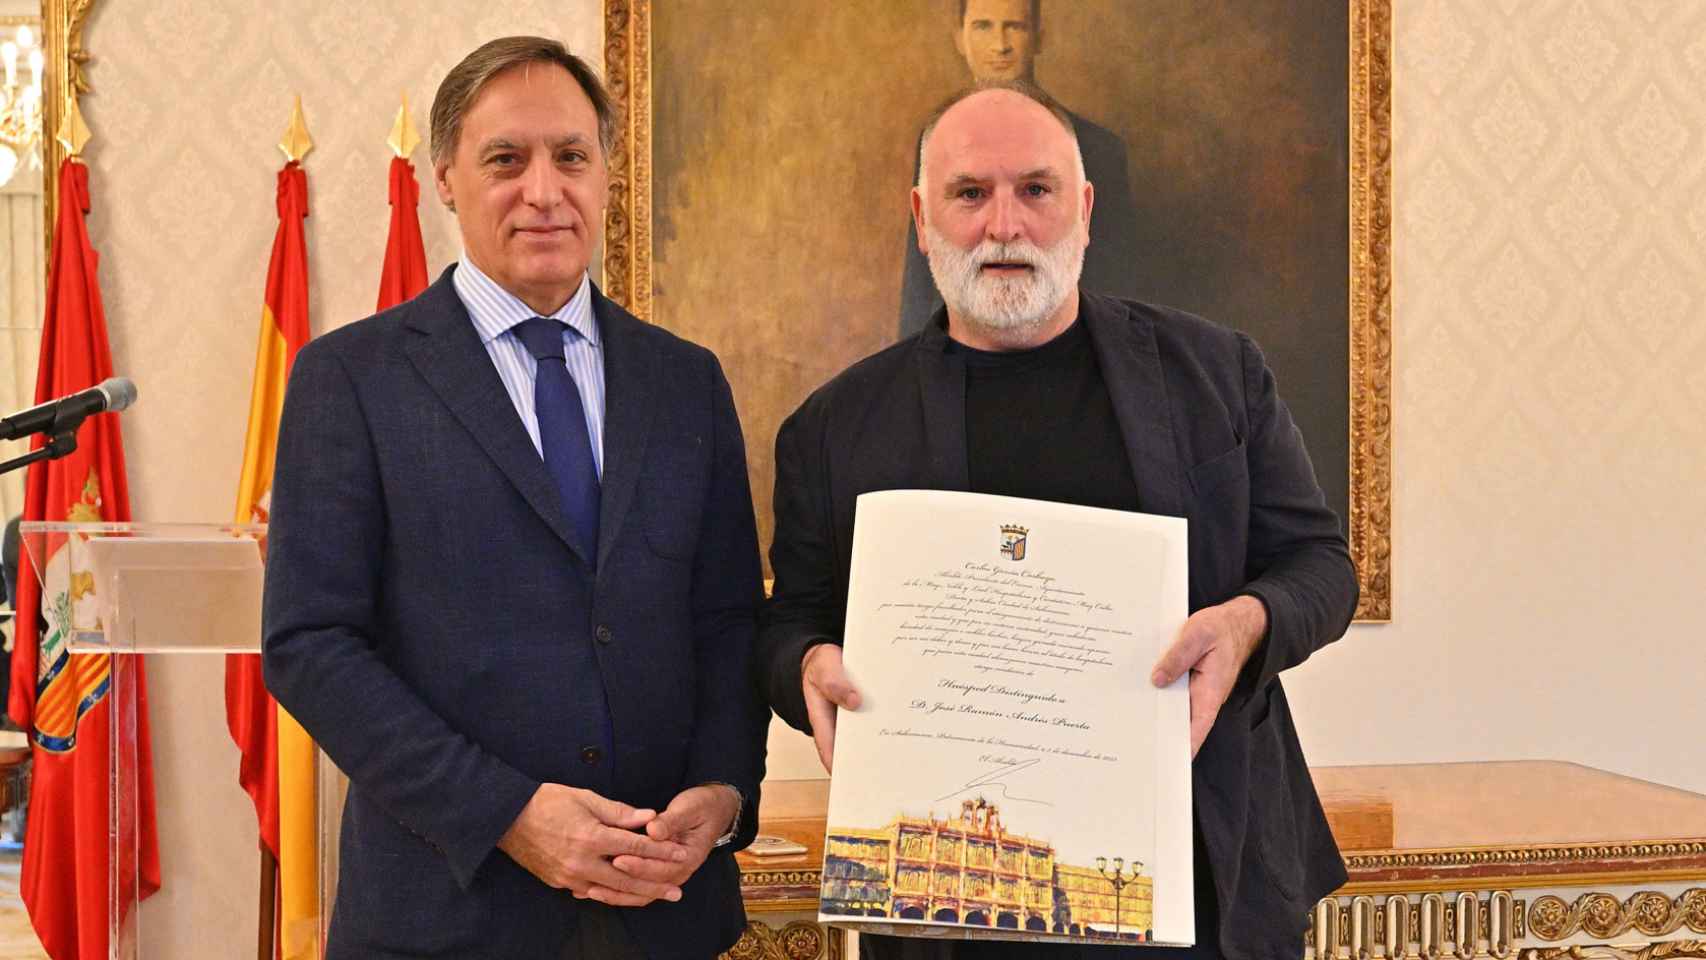 El alcalde de Salamanca entrega el título de Huésped Distinguido al chef José Andrés